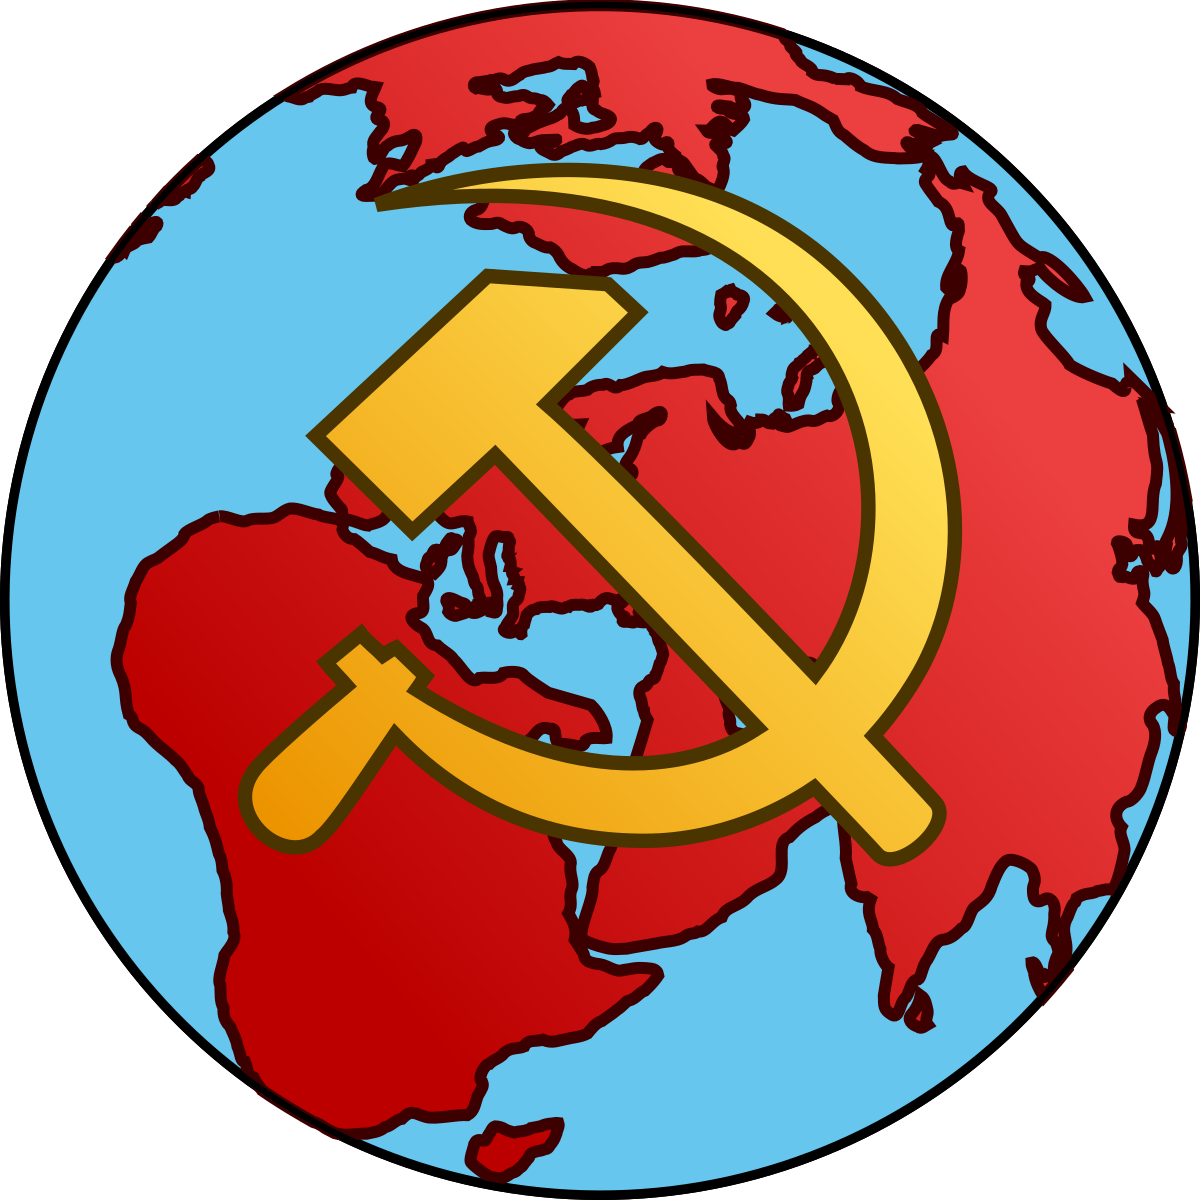 Communist International - Wikipedia